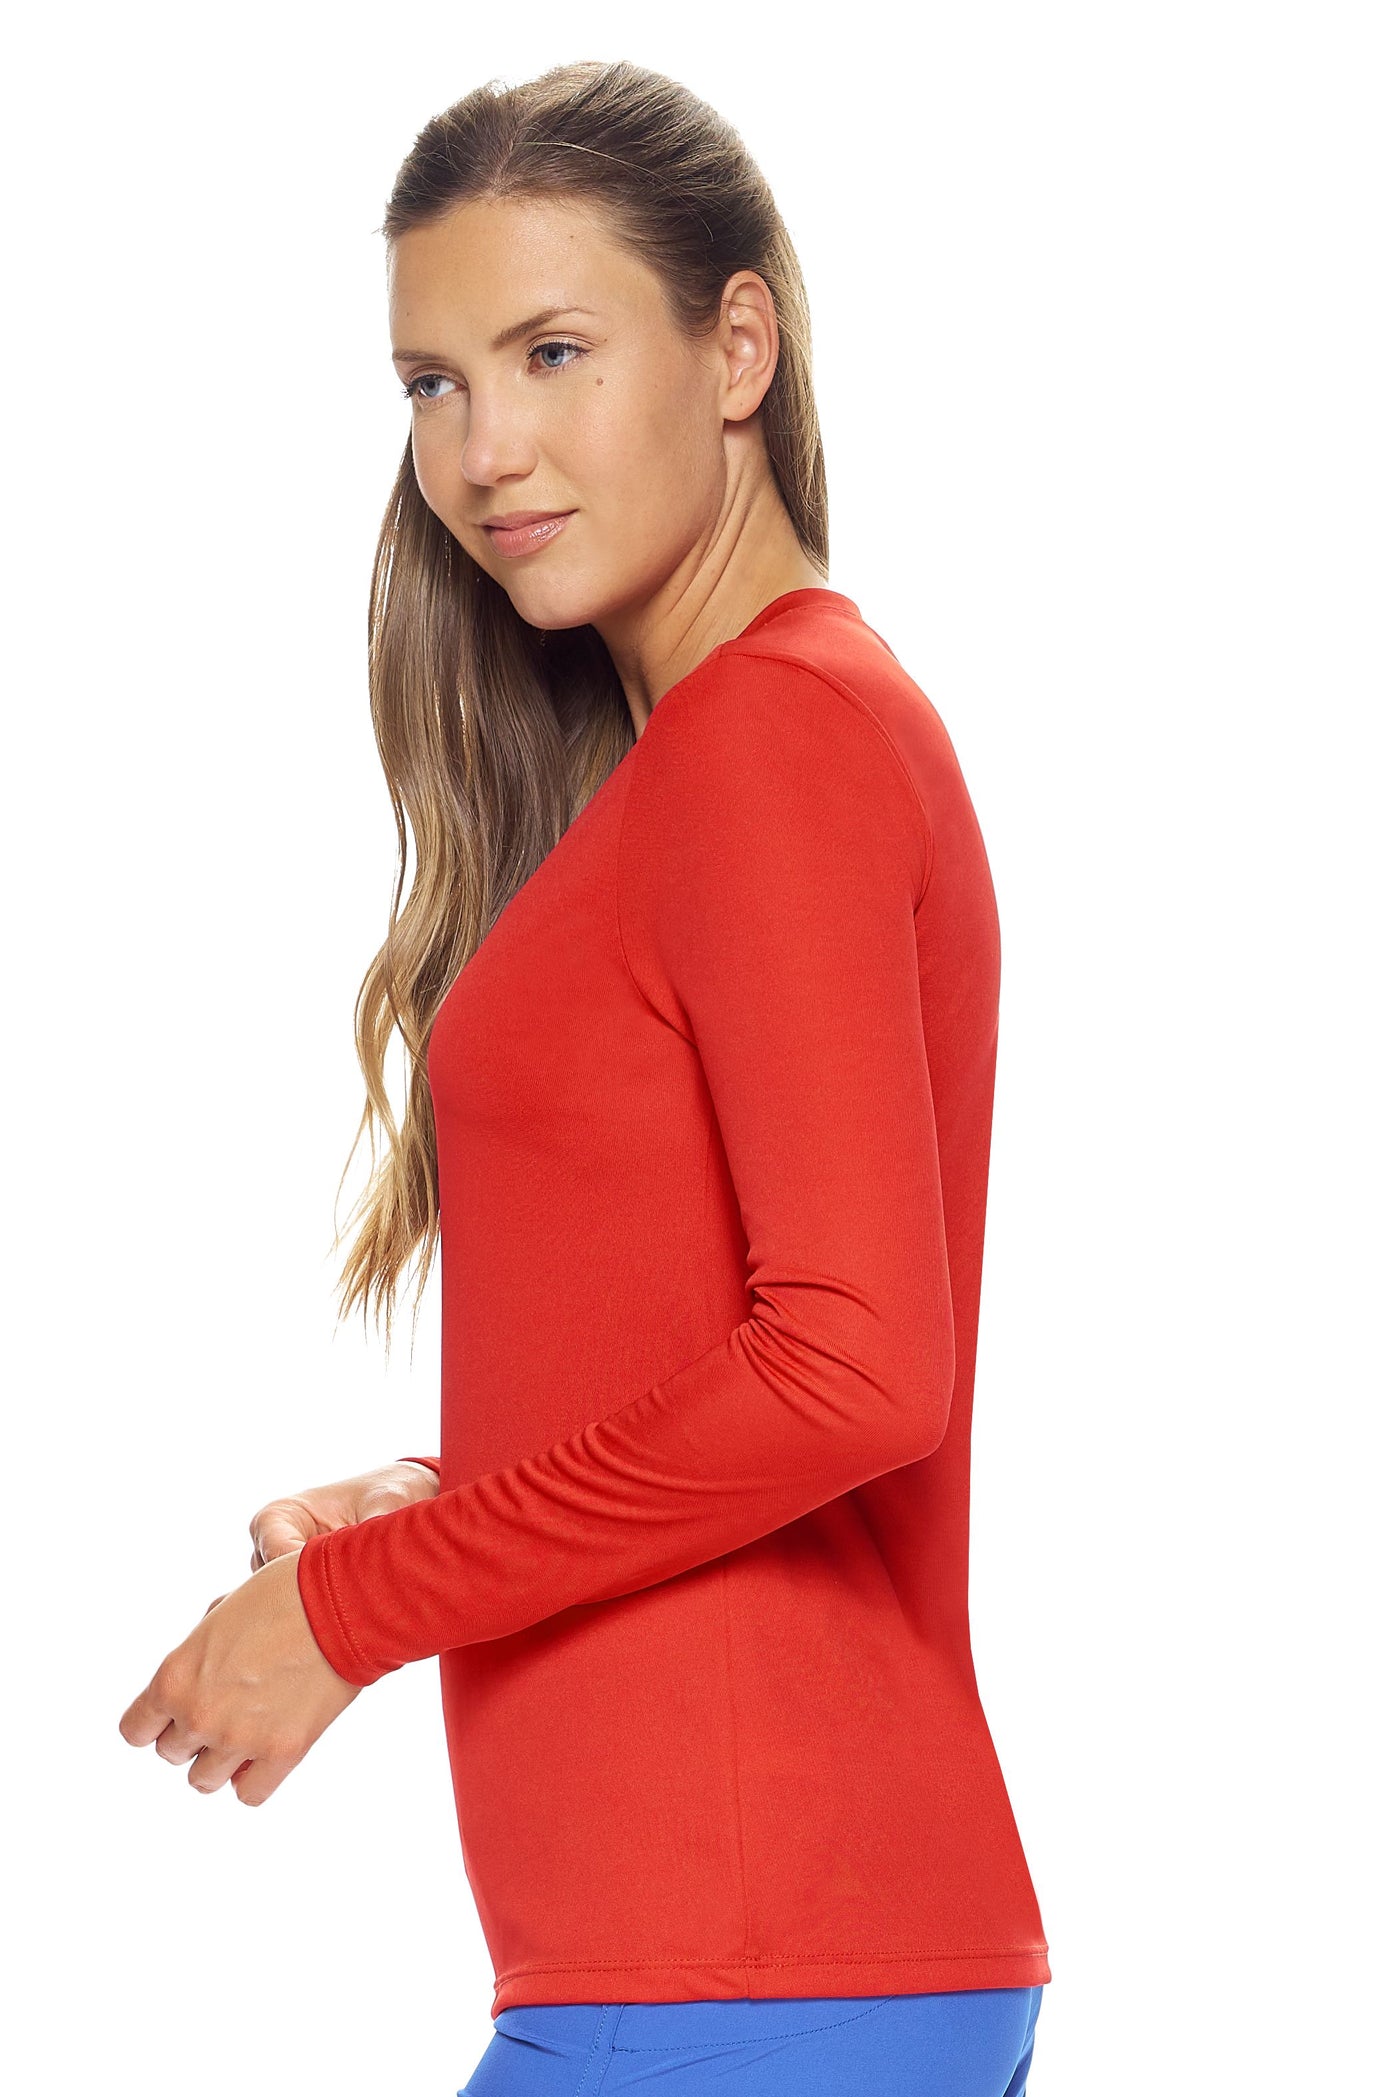 DriMax™ V-Neck Long Sleeve Tec Tee 🇺🇸 - Expert Brand Apparel#color_true-red